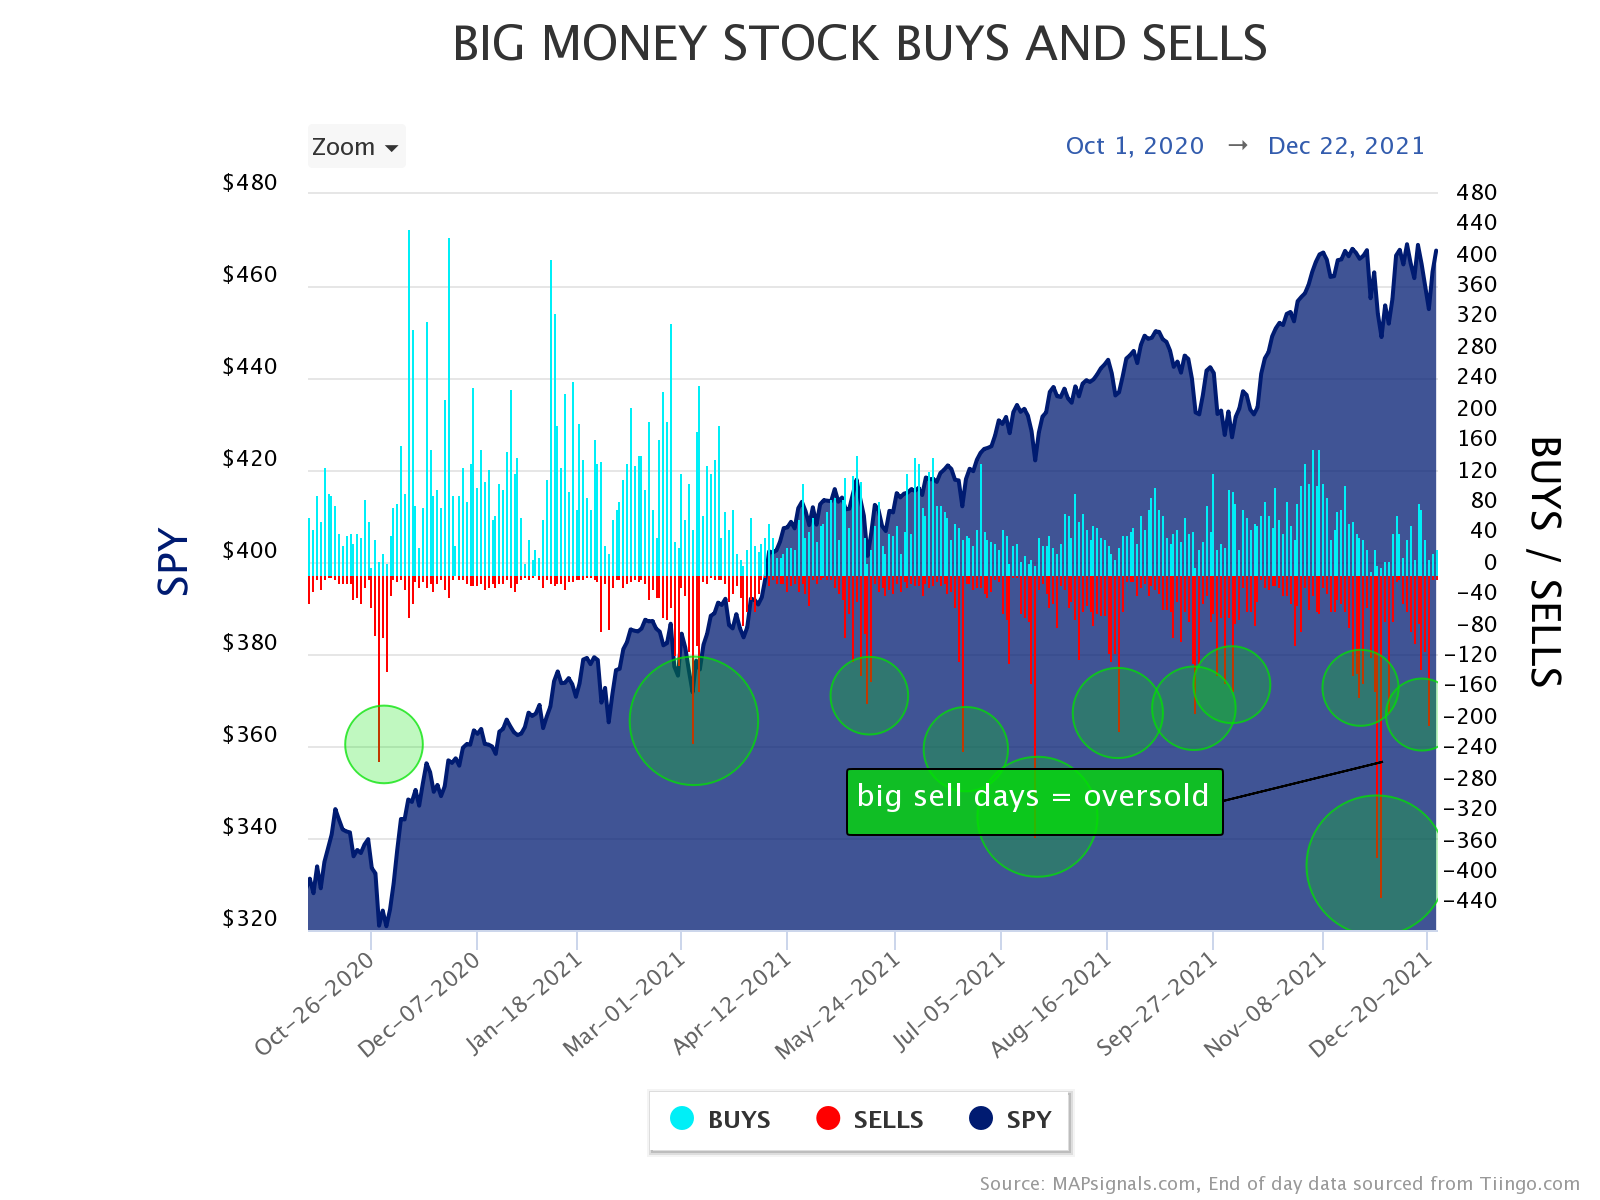 Big sell days equal oversold stocks